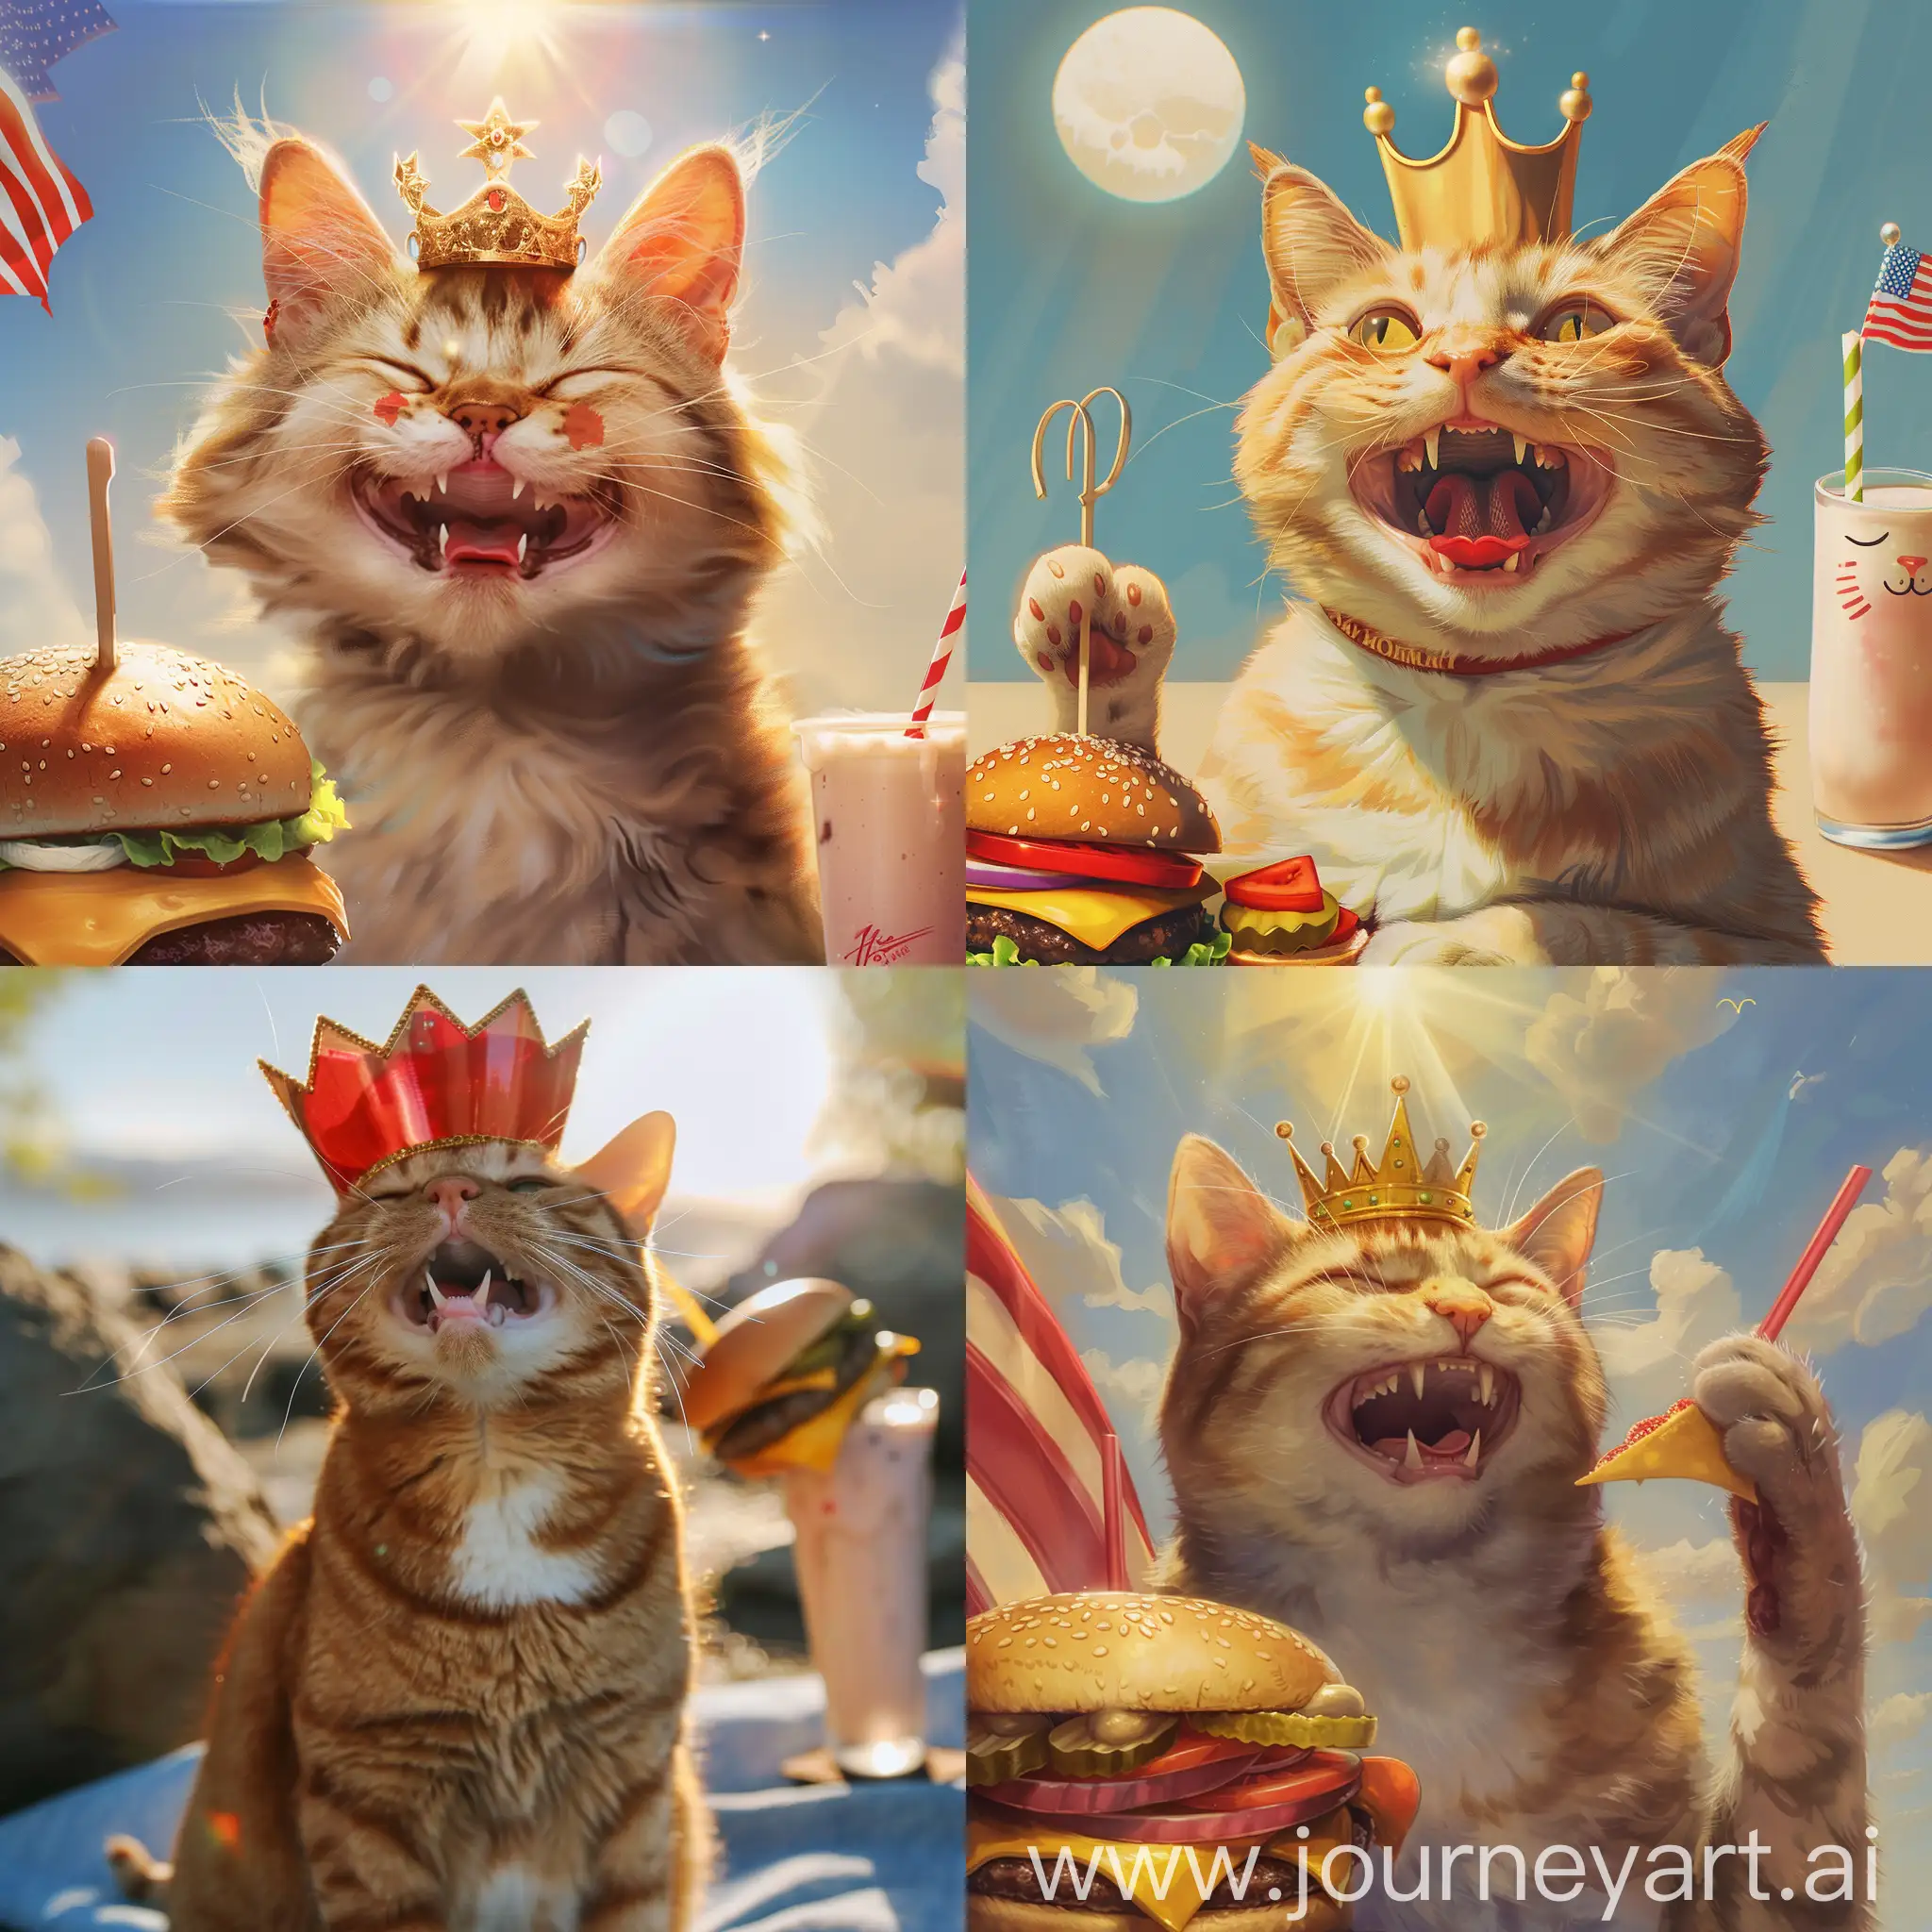 a cat, in the sun, wearing a crown, smiling, from america, enjoying a cheeseburger, enjoying a milkshake